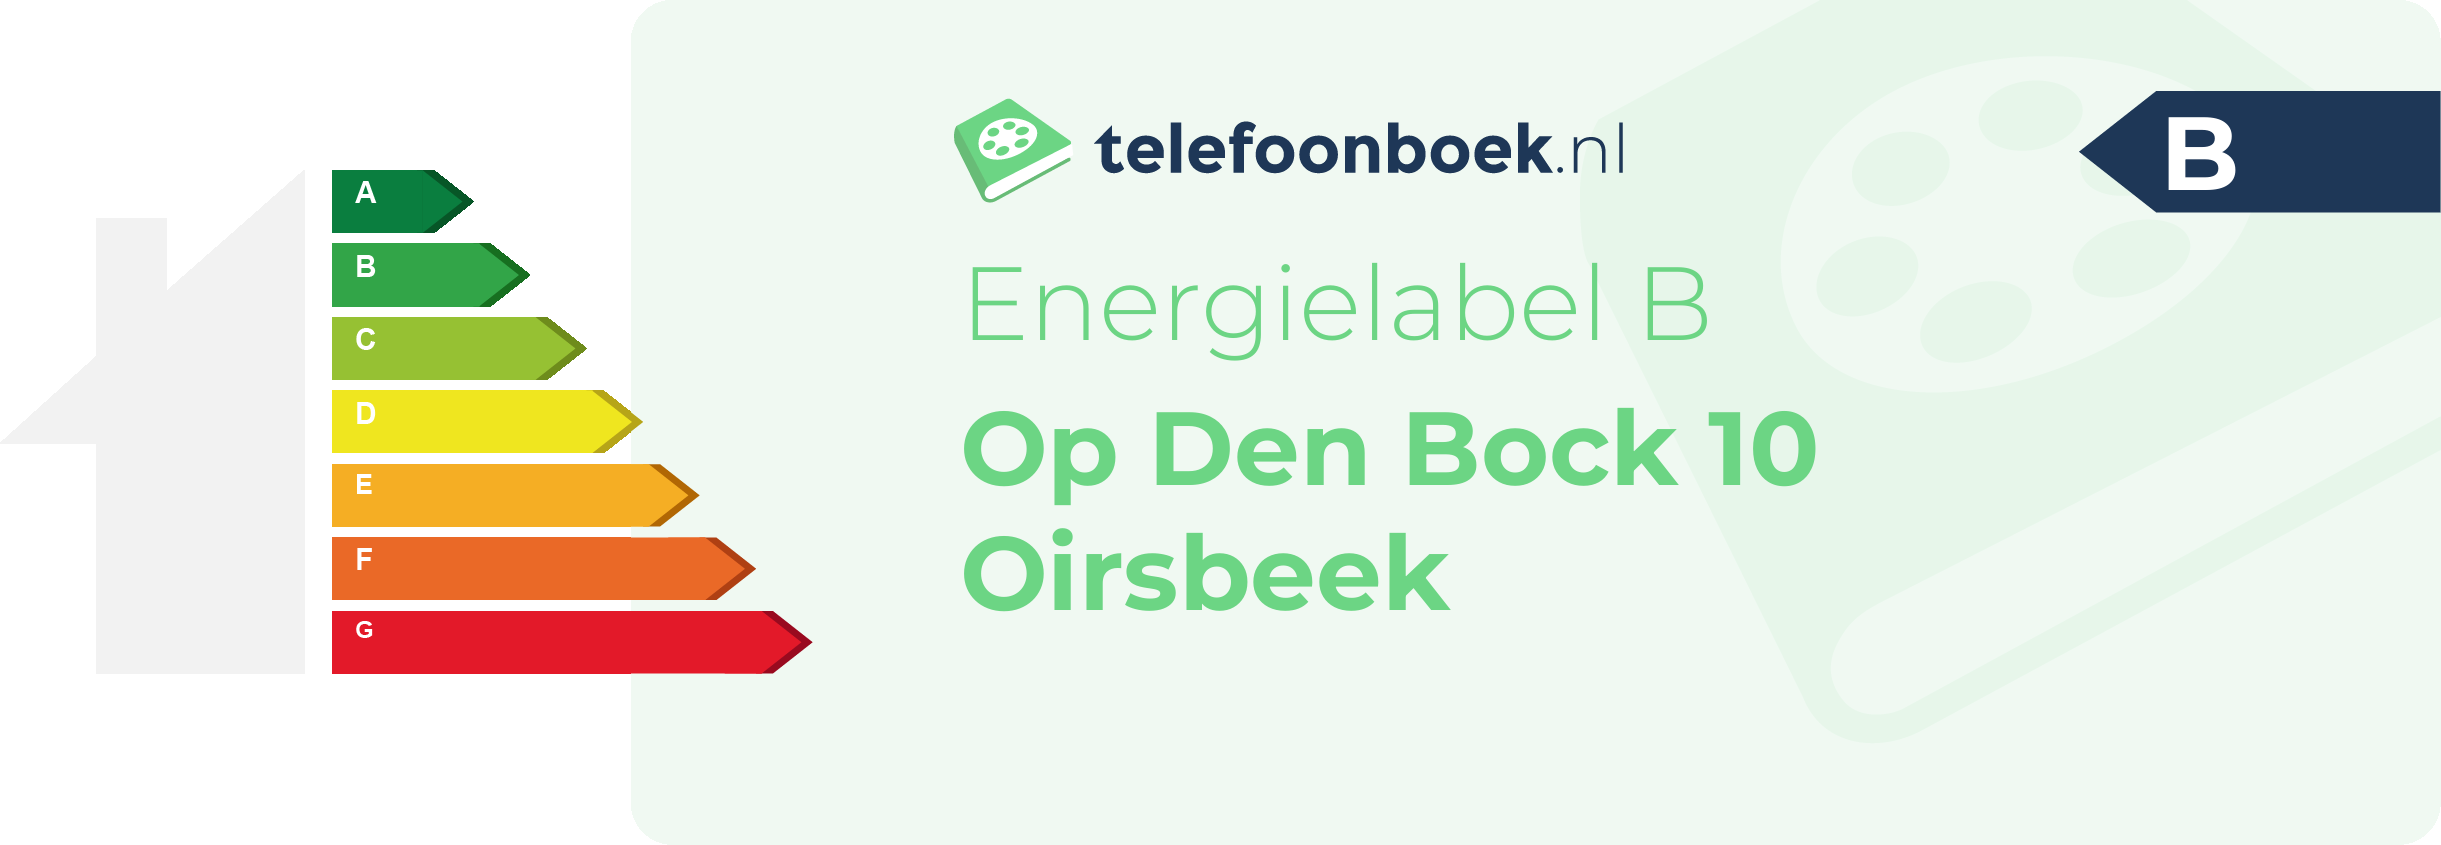 Energielabel Op Den Bock 10 Oirsbeek